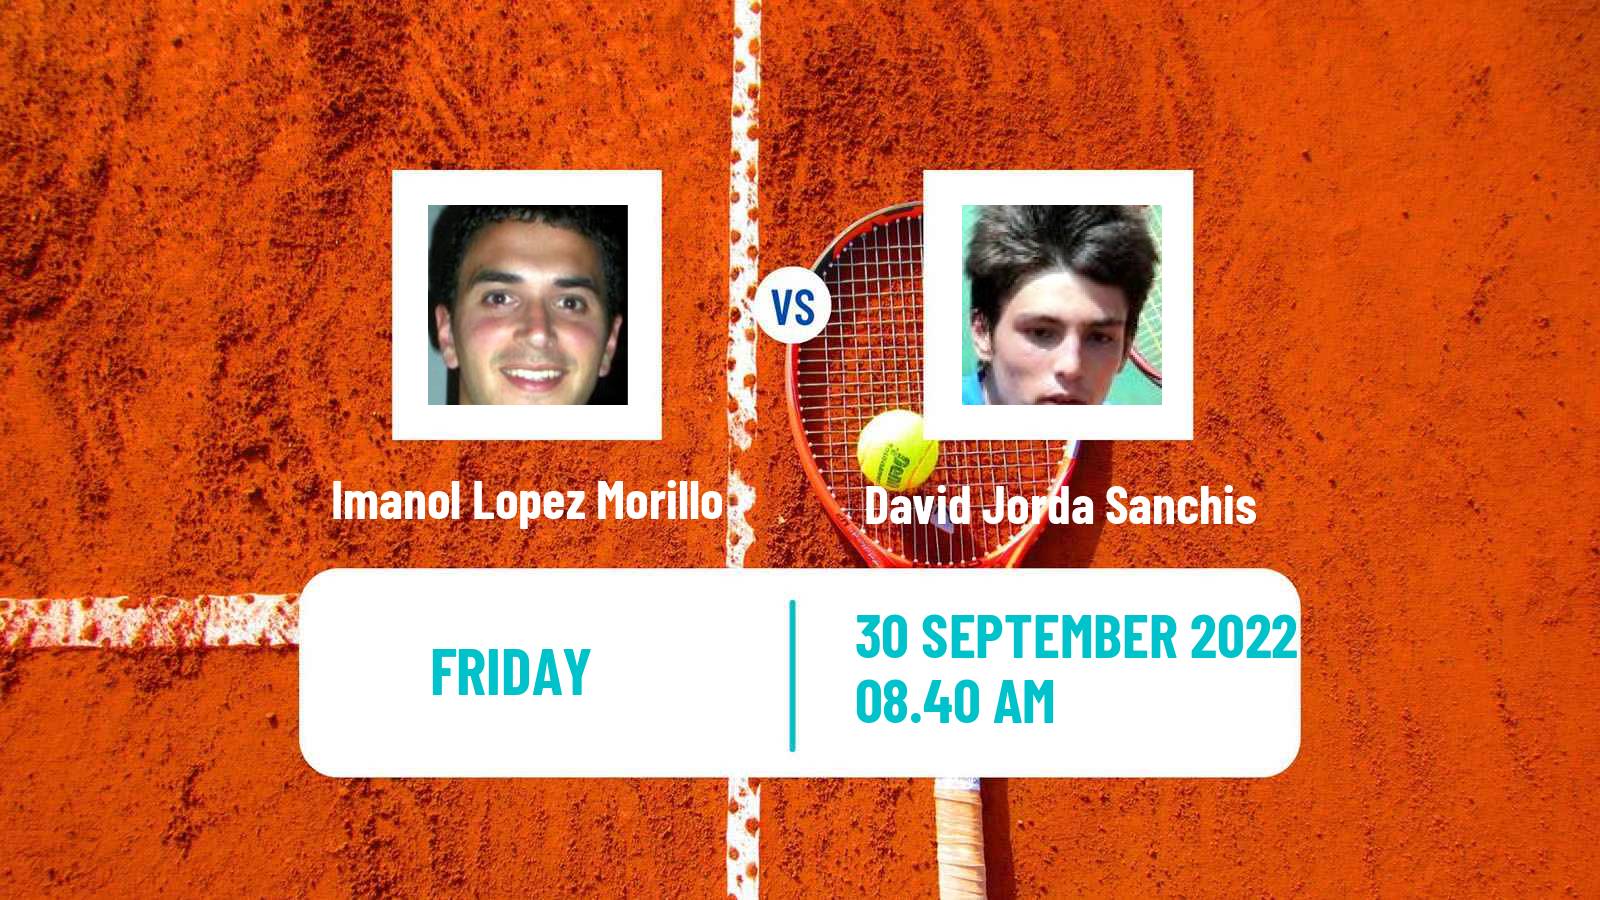 Tennis ITF Tournaments Imanol Lopez Morillo - David Jorda Sanchis